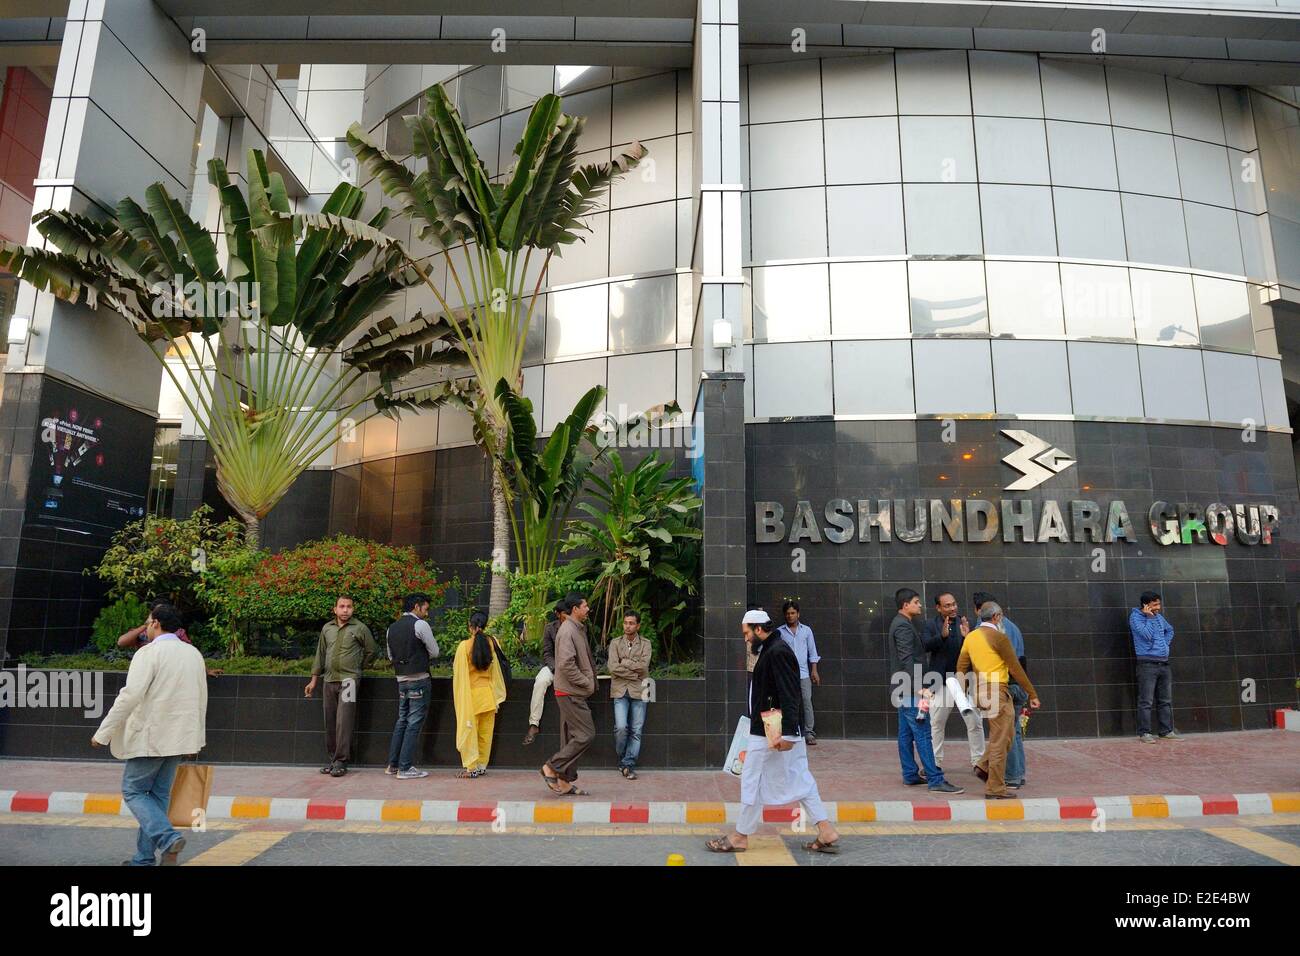 Bashundhara City Shopping Mall High Resolution Stock ...